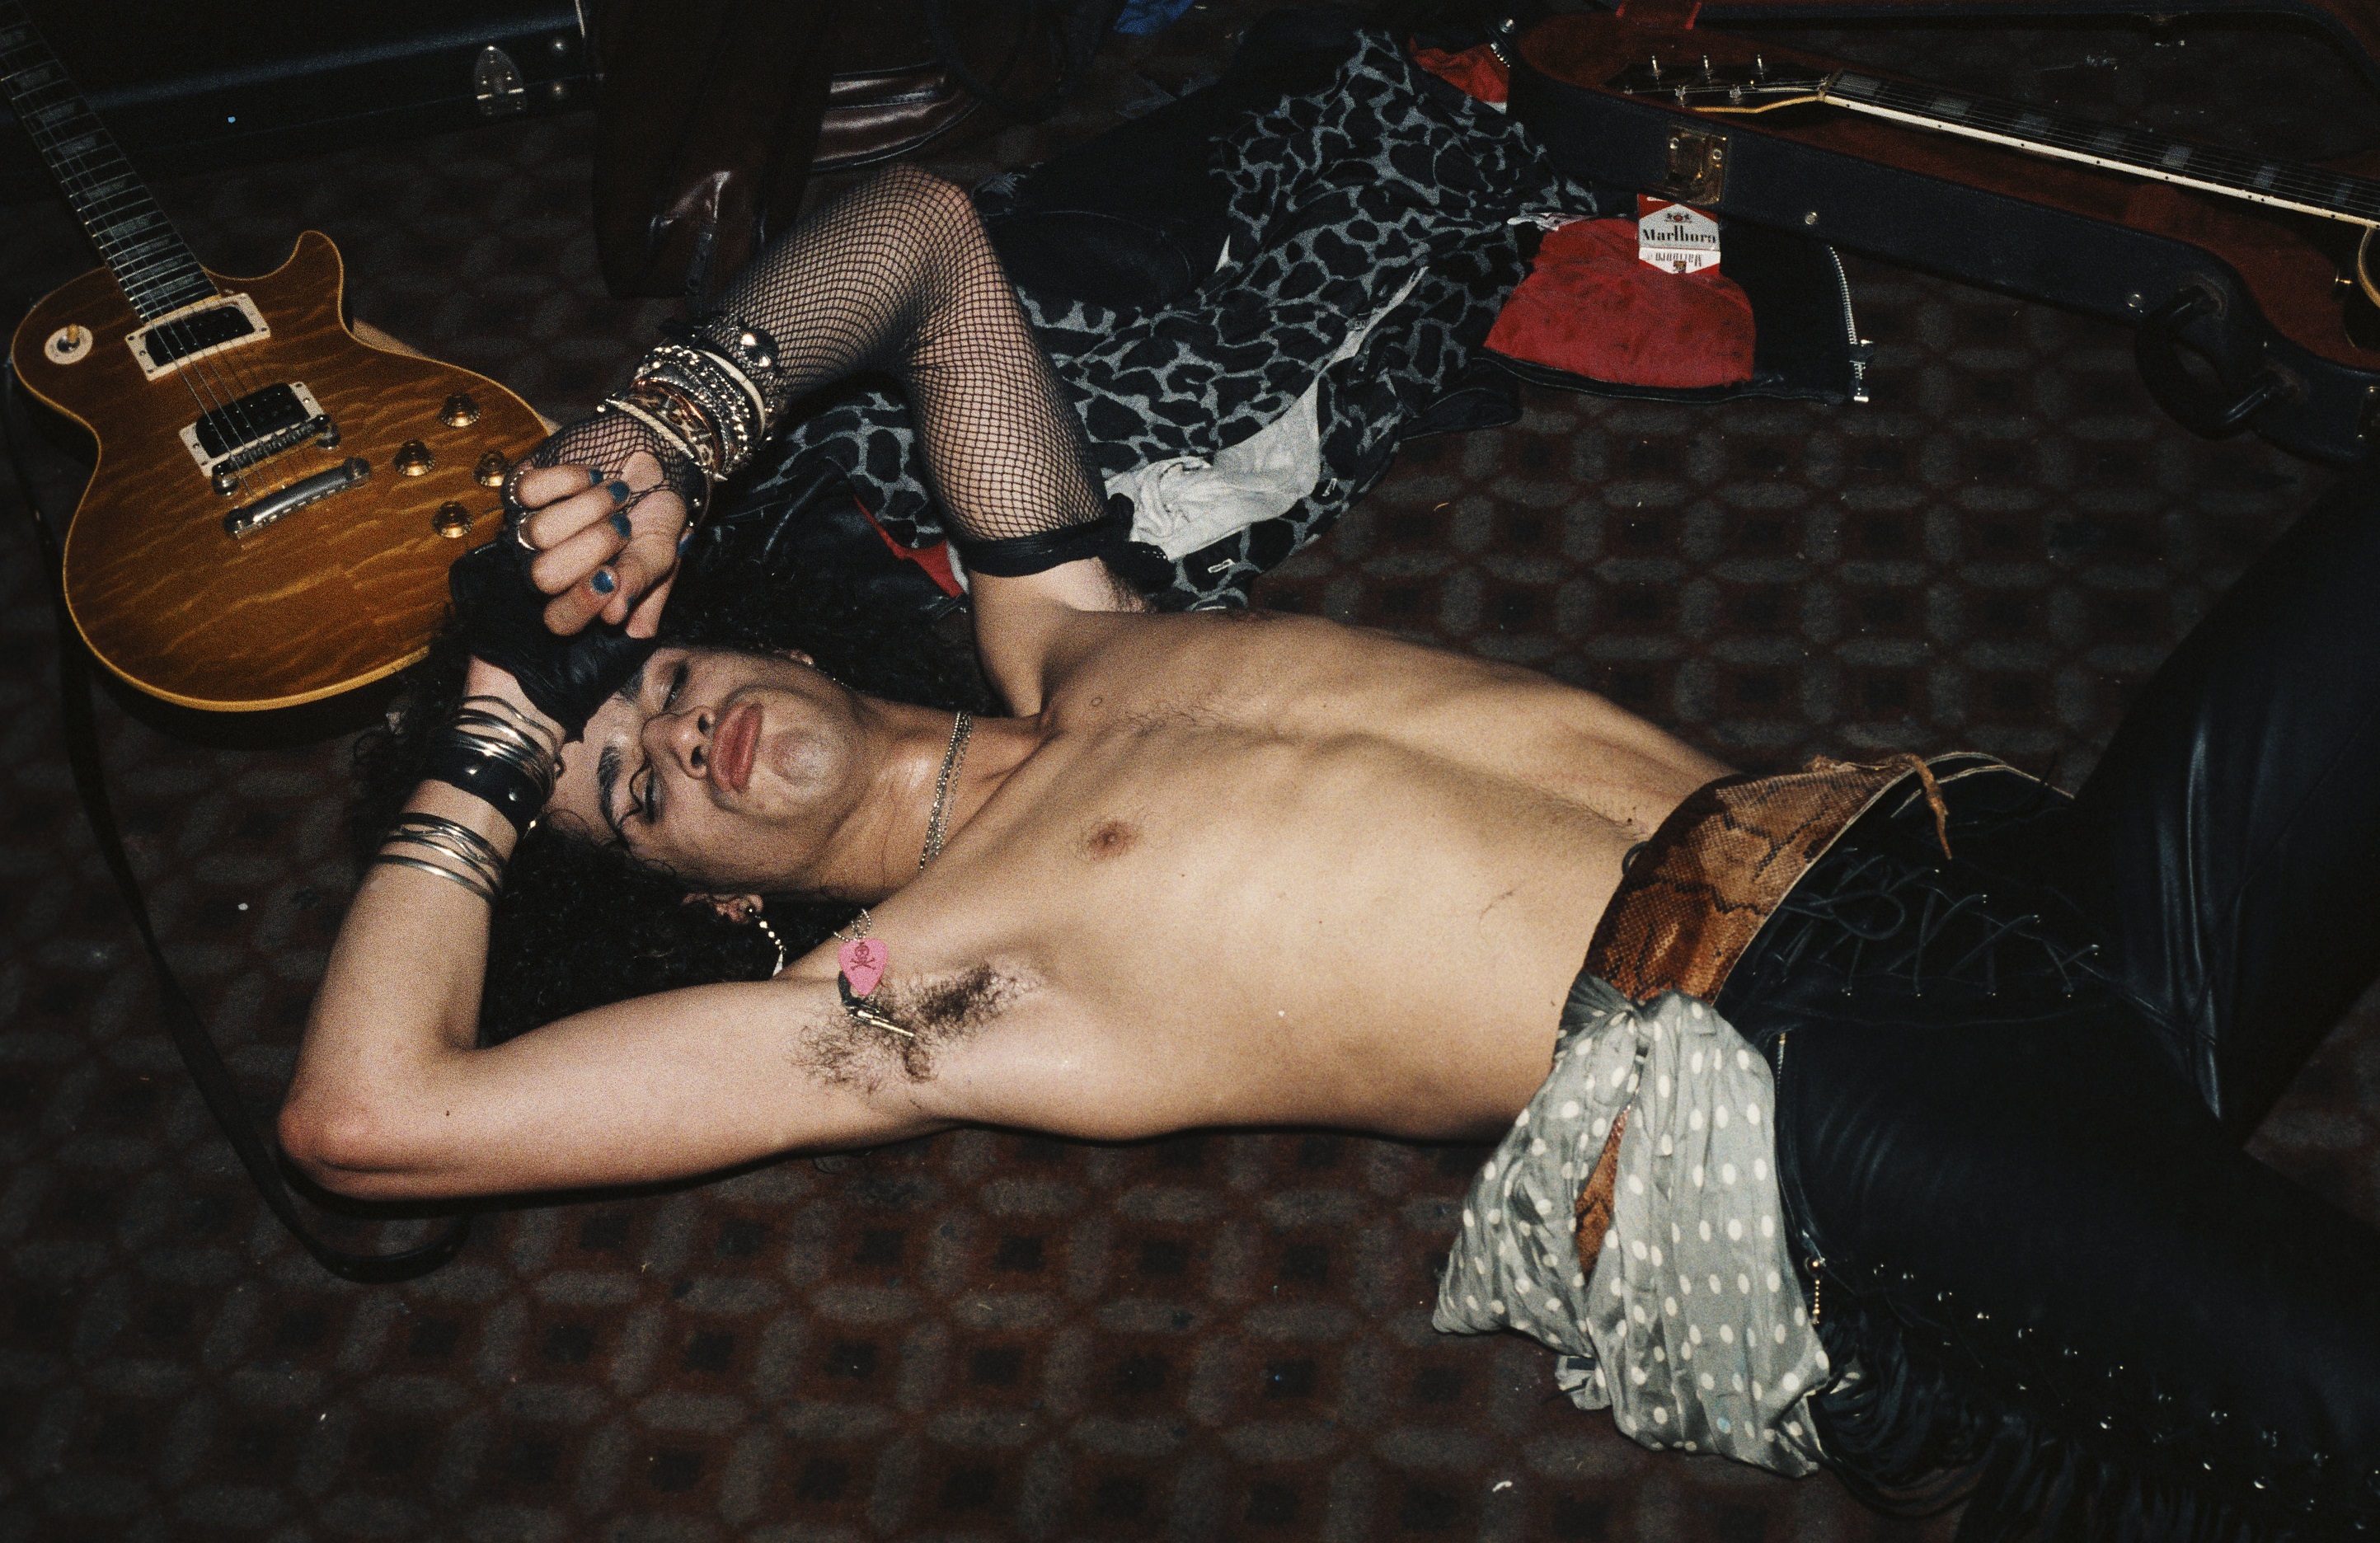 Slash of Guns N' Roses lying on the floor near a guitar